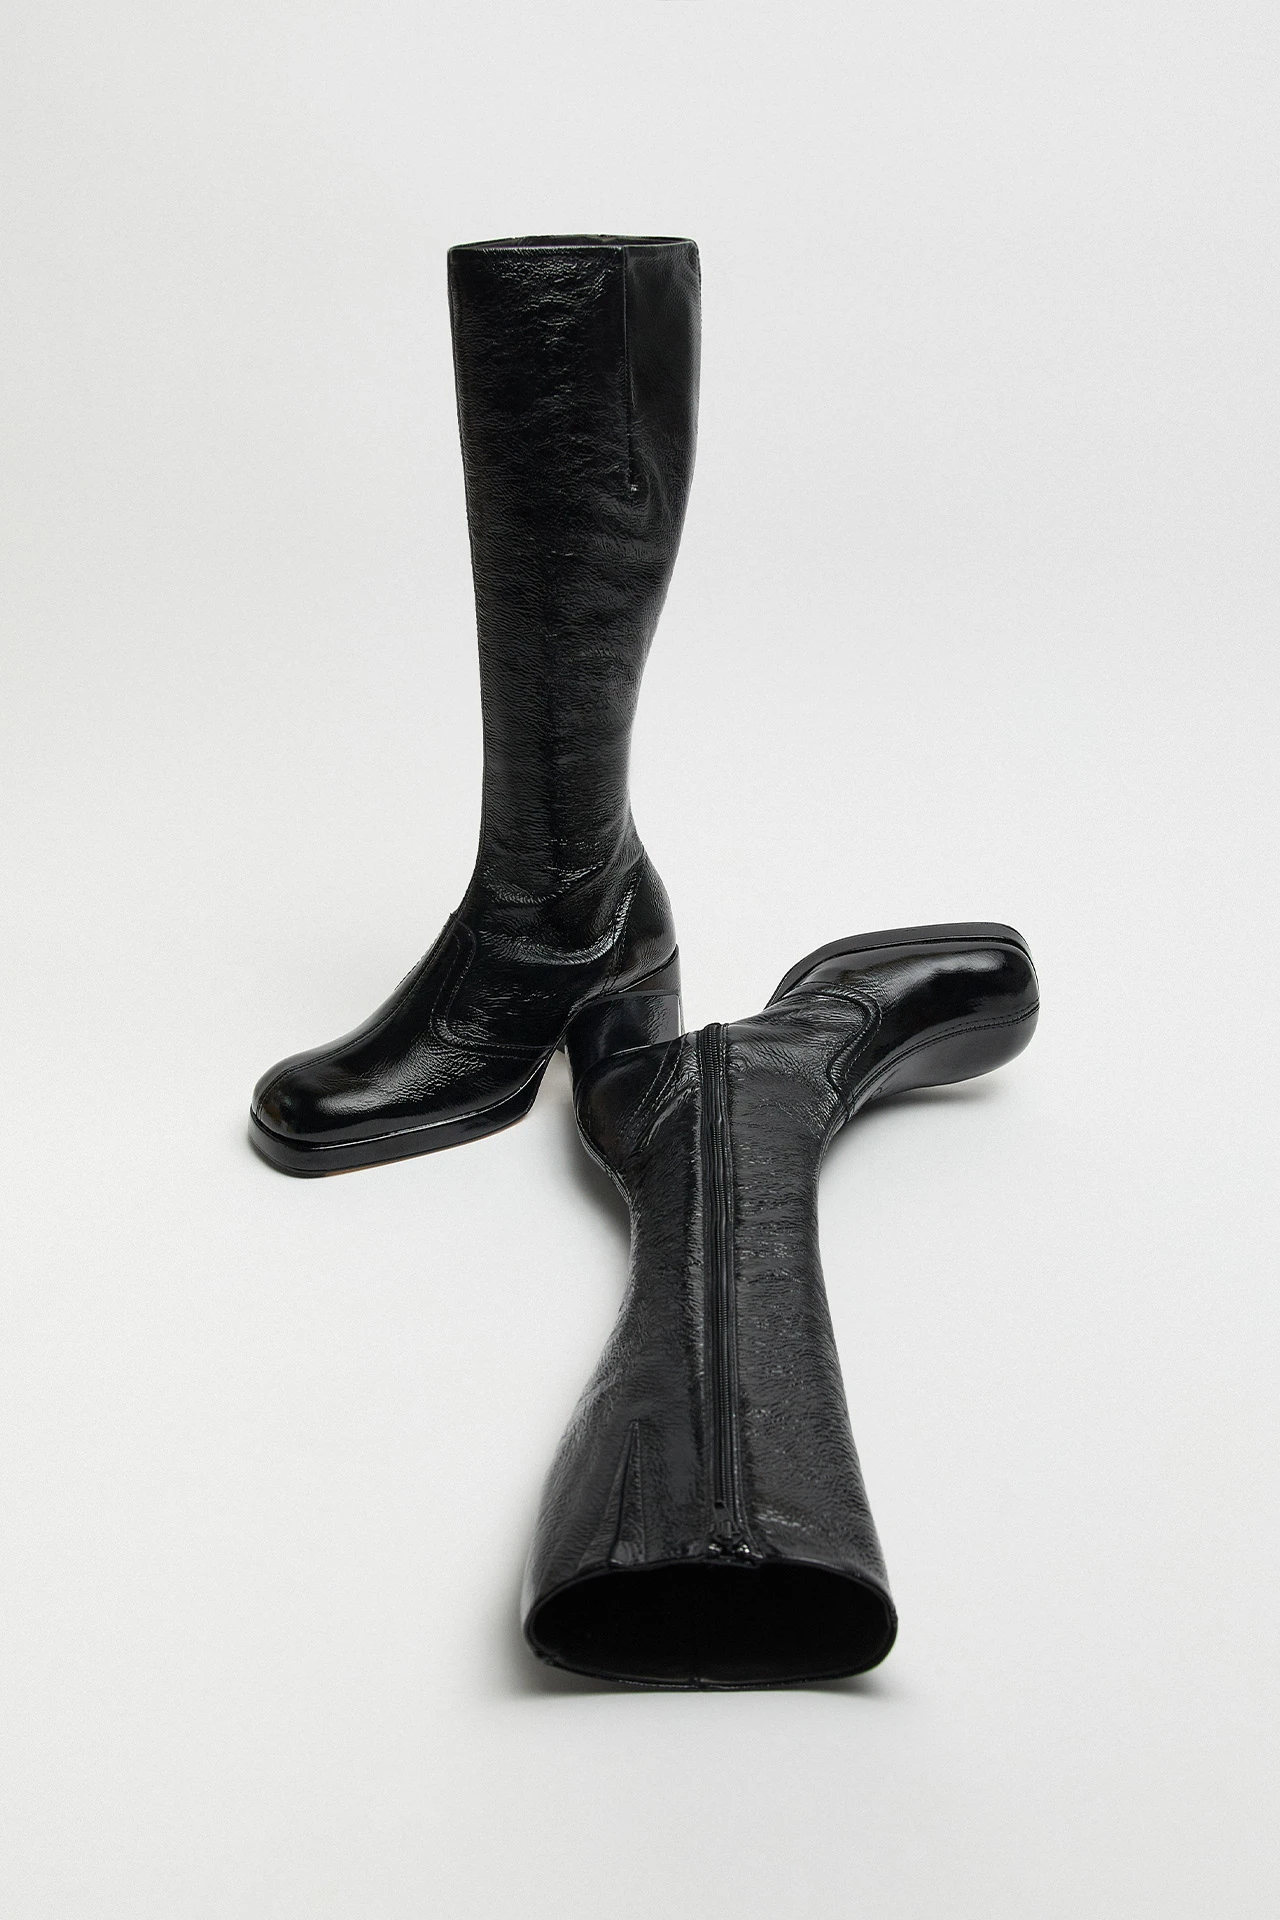 Miista-Donna-Black-Boots-02